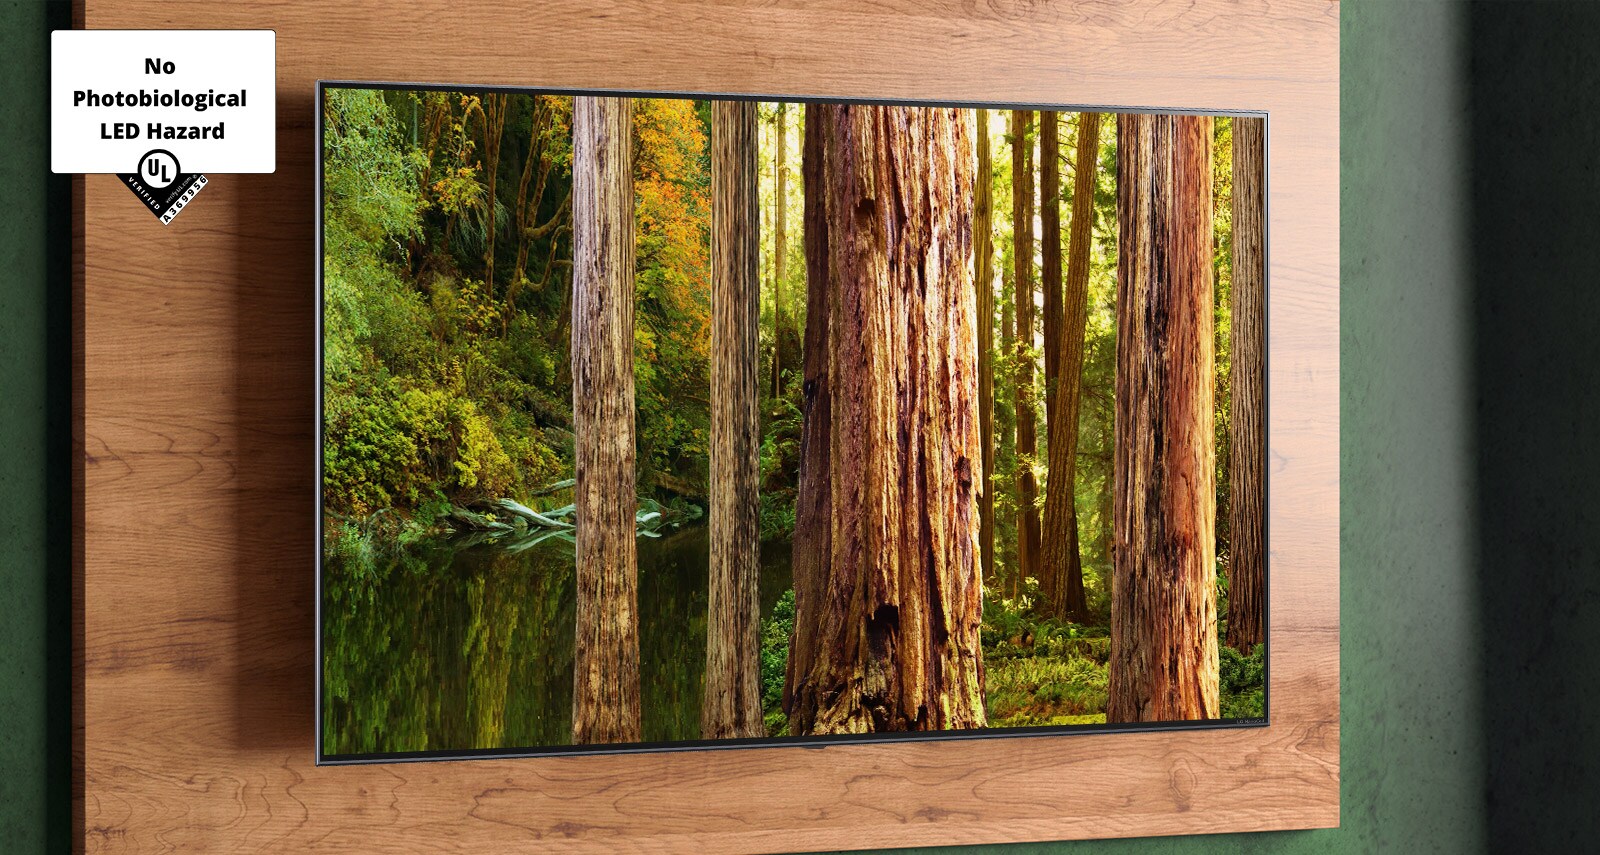 Slika šume na TV zaslonu